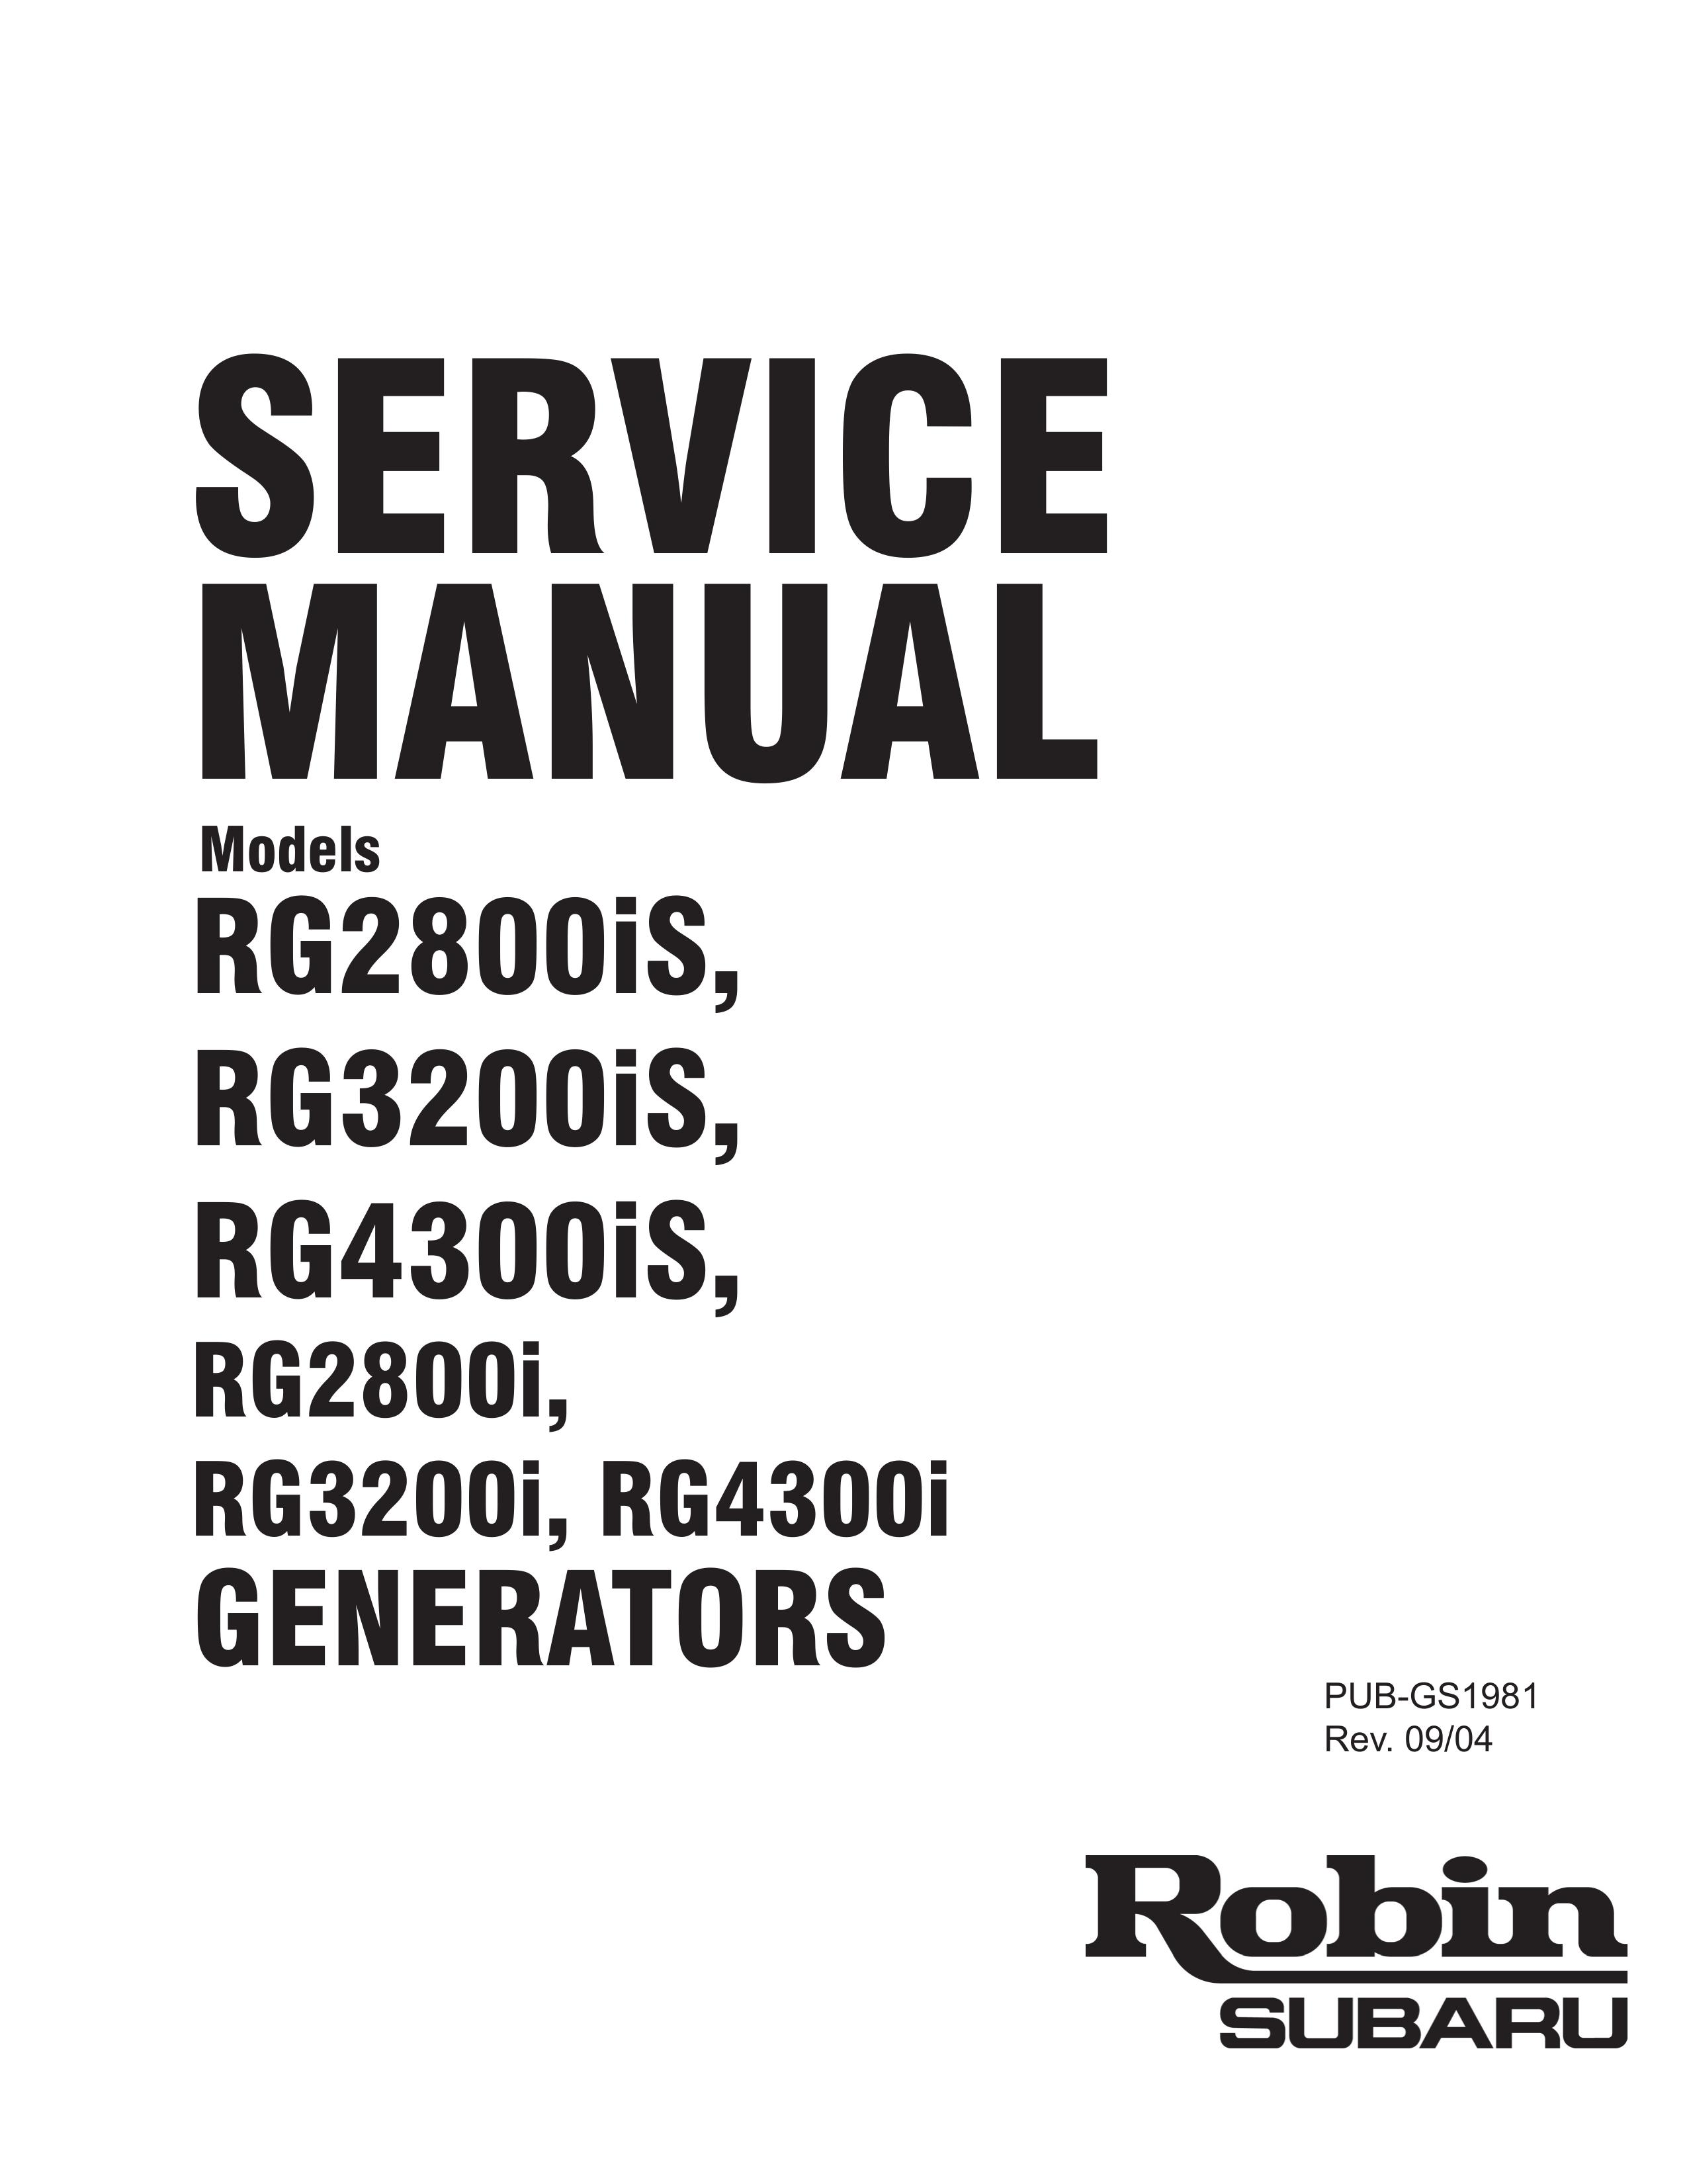 Subaru Robin Power Products RG4300I Portable Generator User Manual